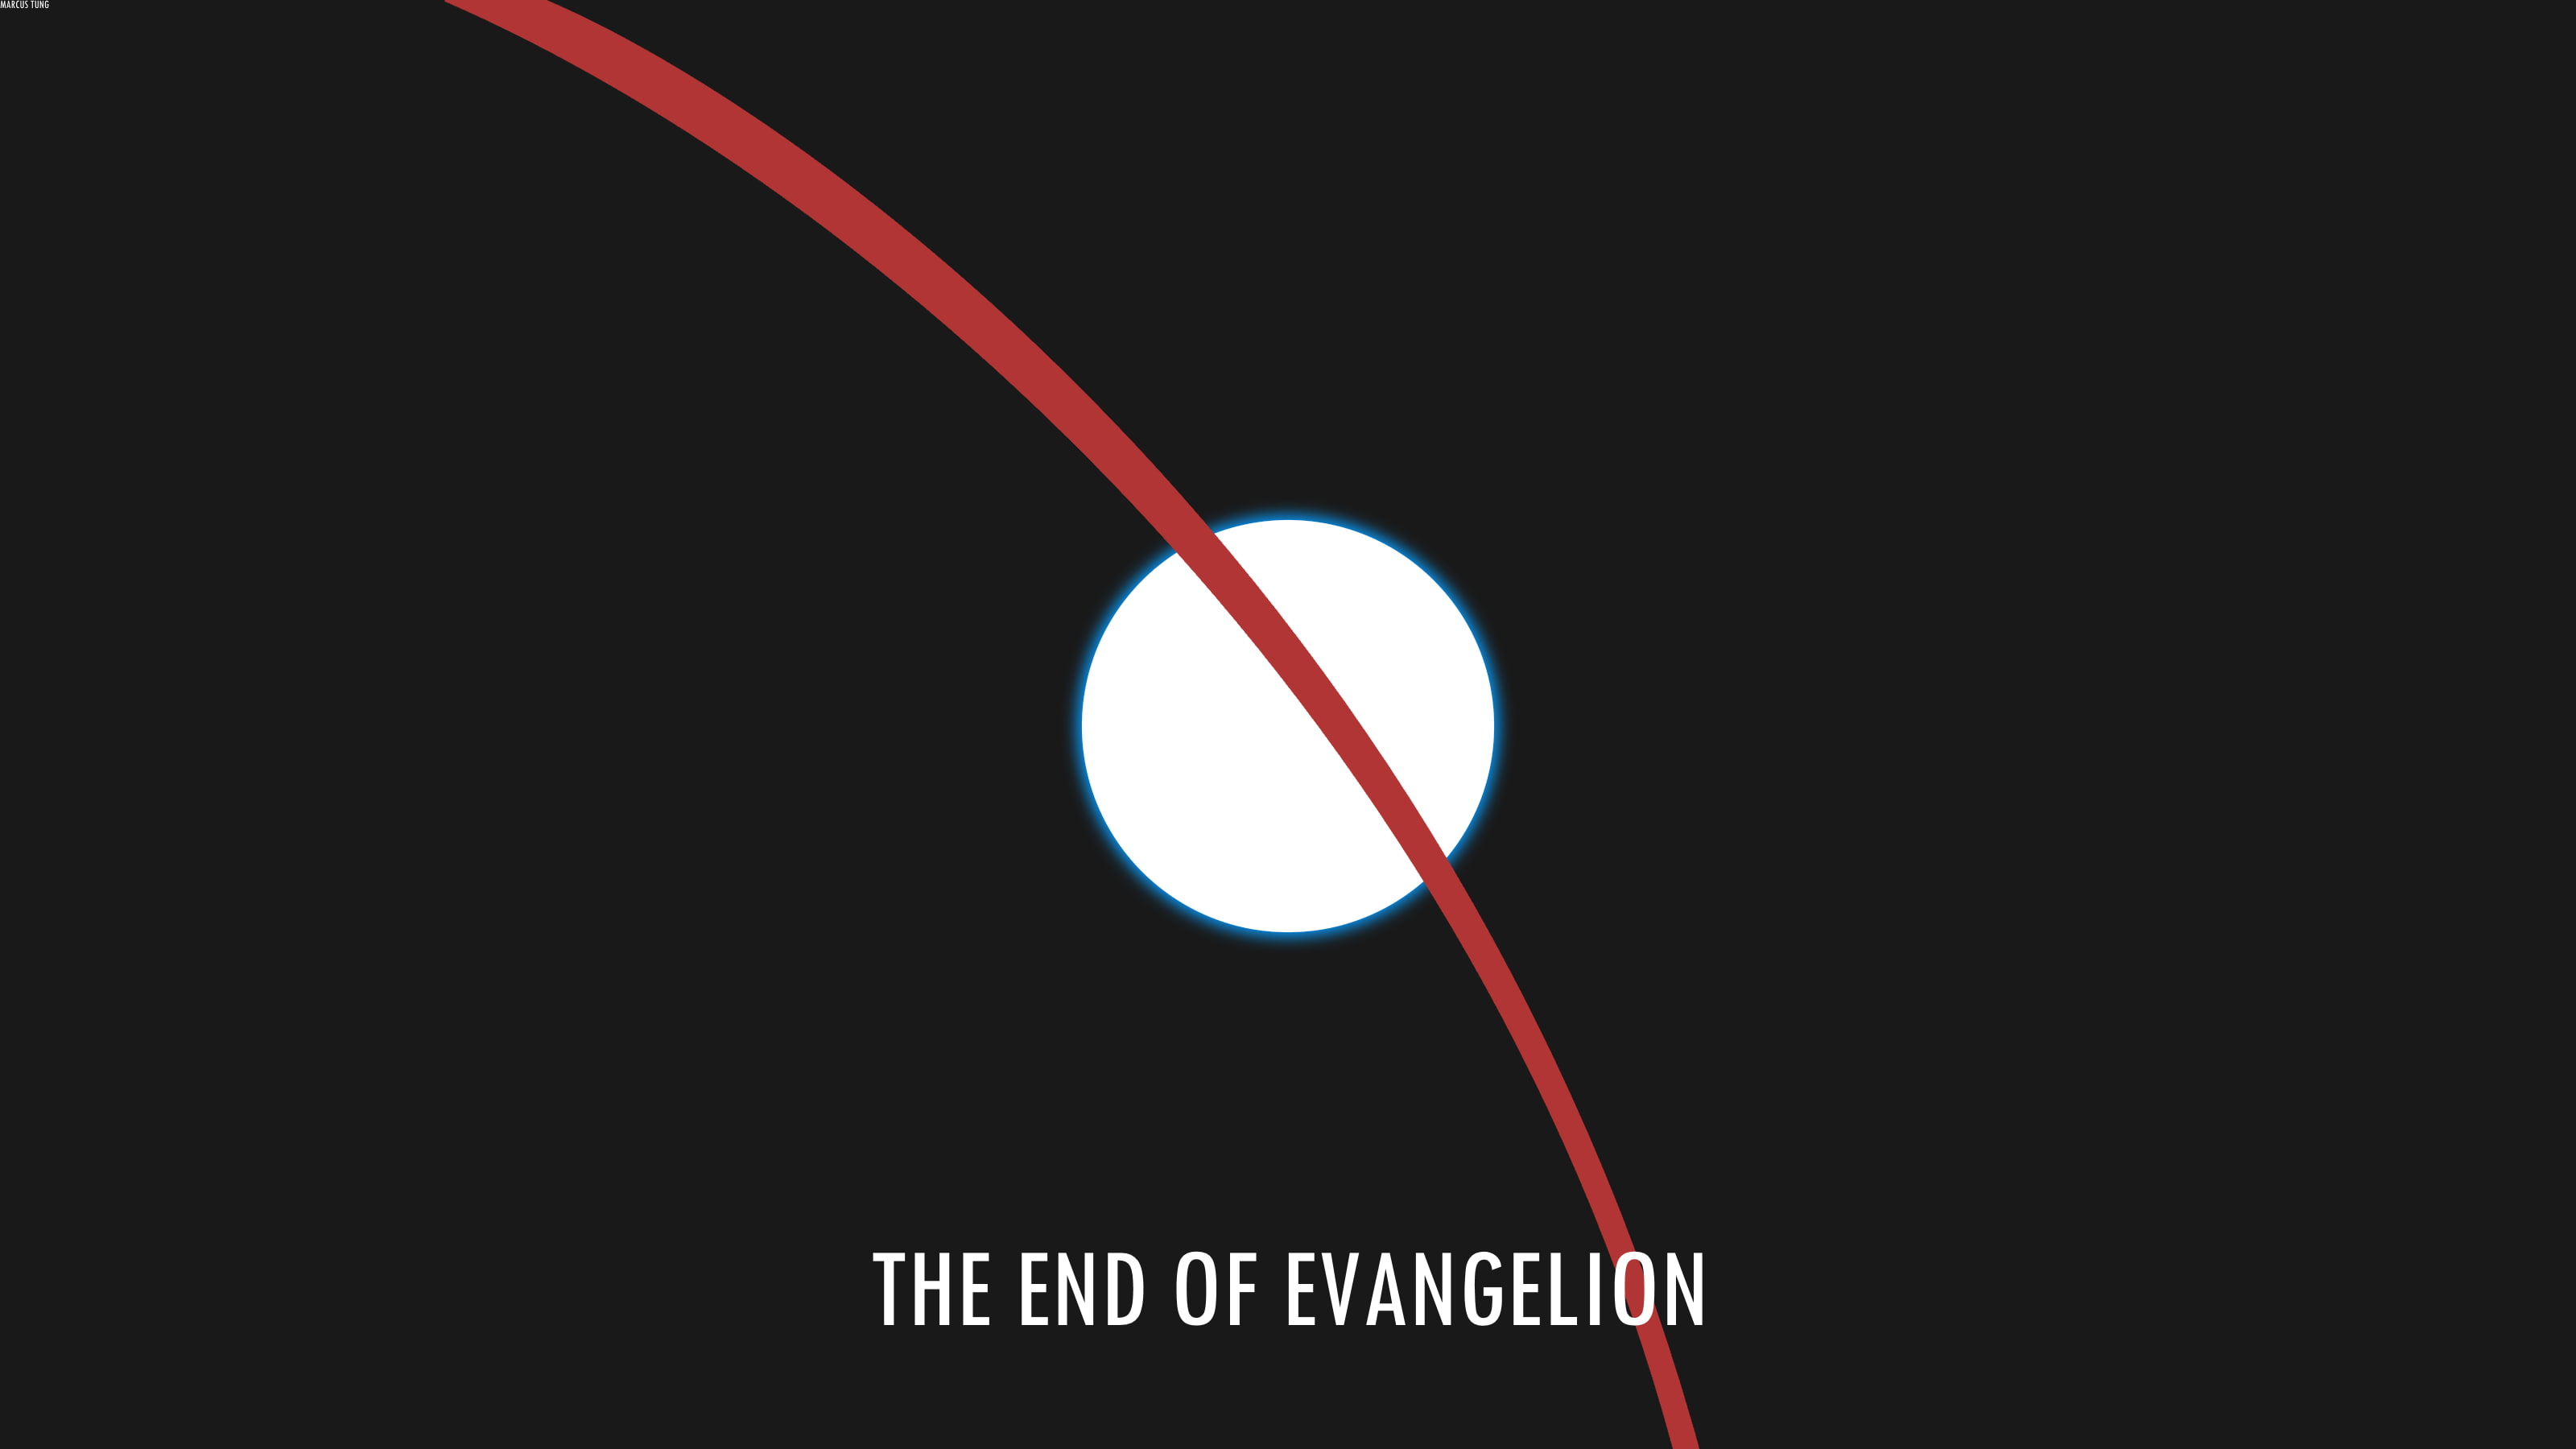 Neon Genesis Evangelion, The End of Evangelion, red, studio shot